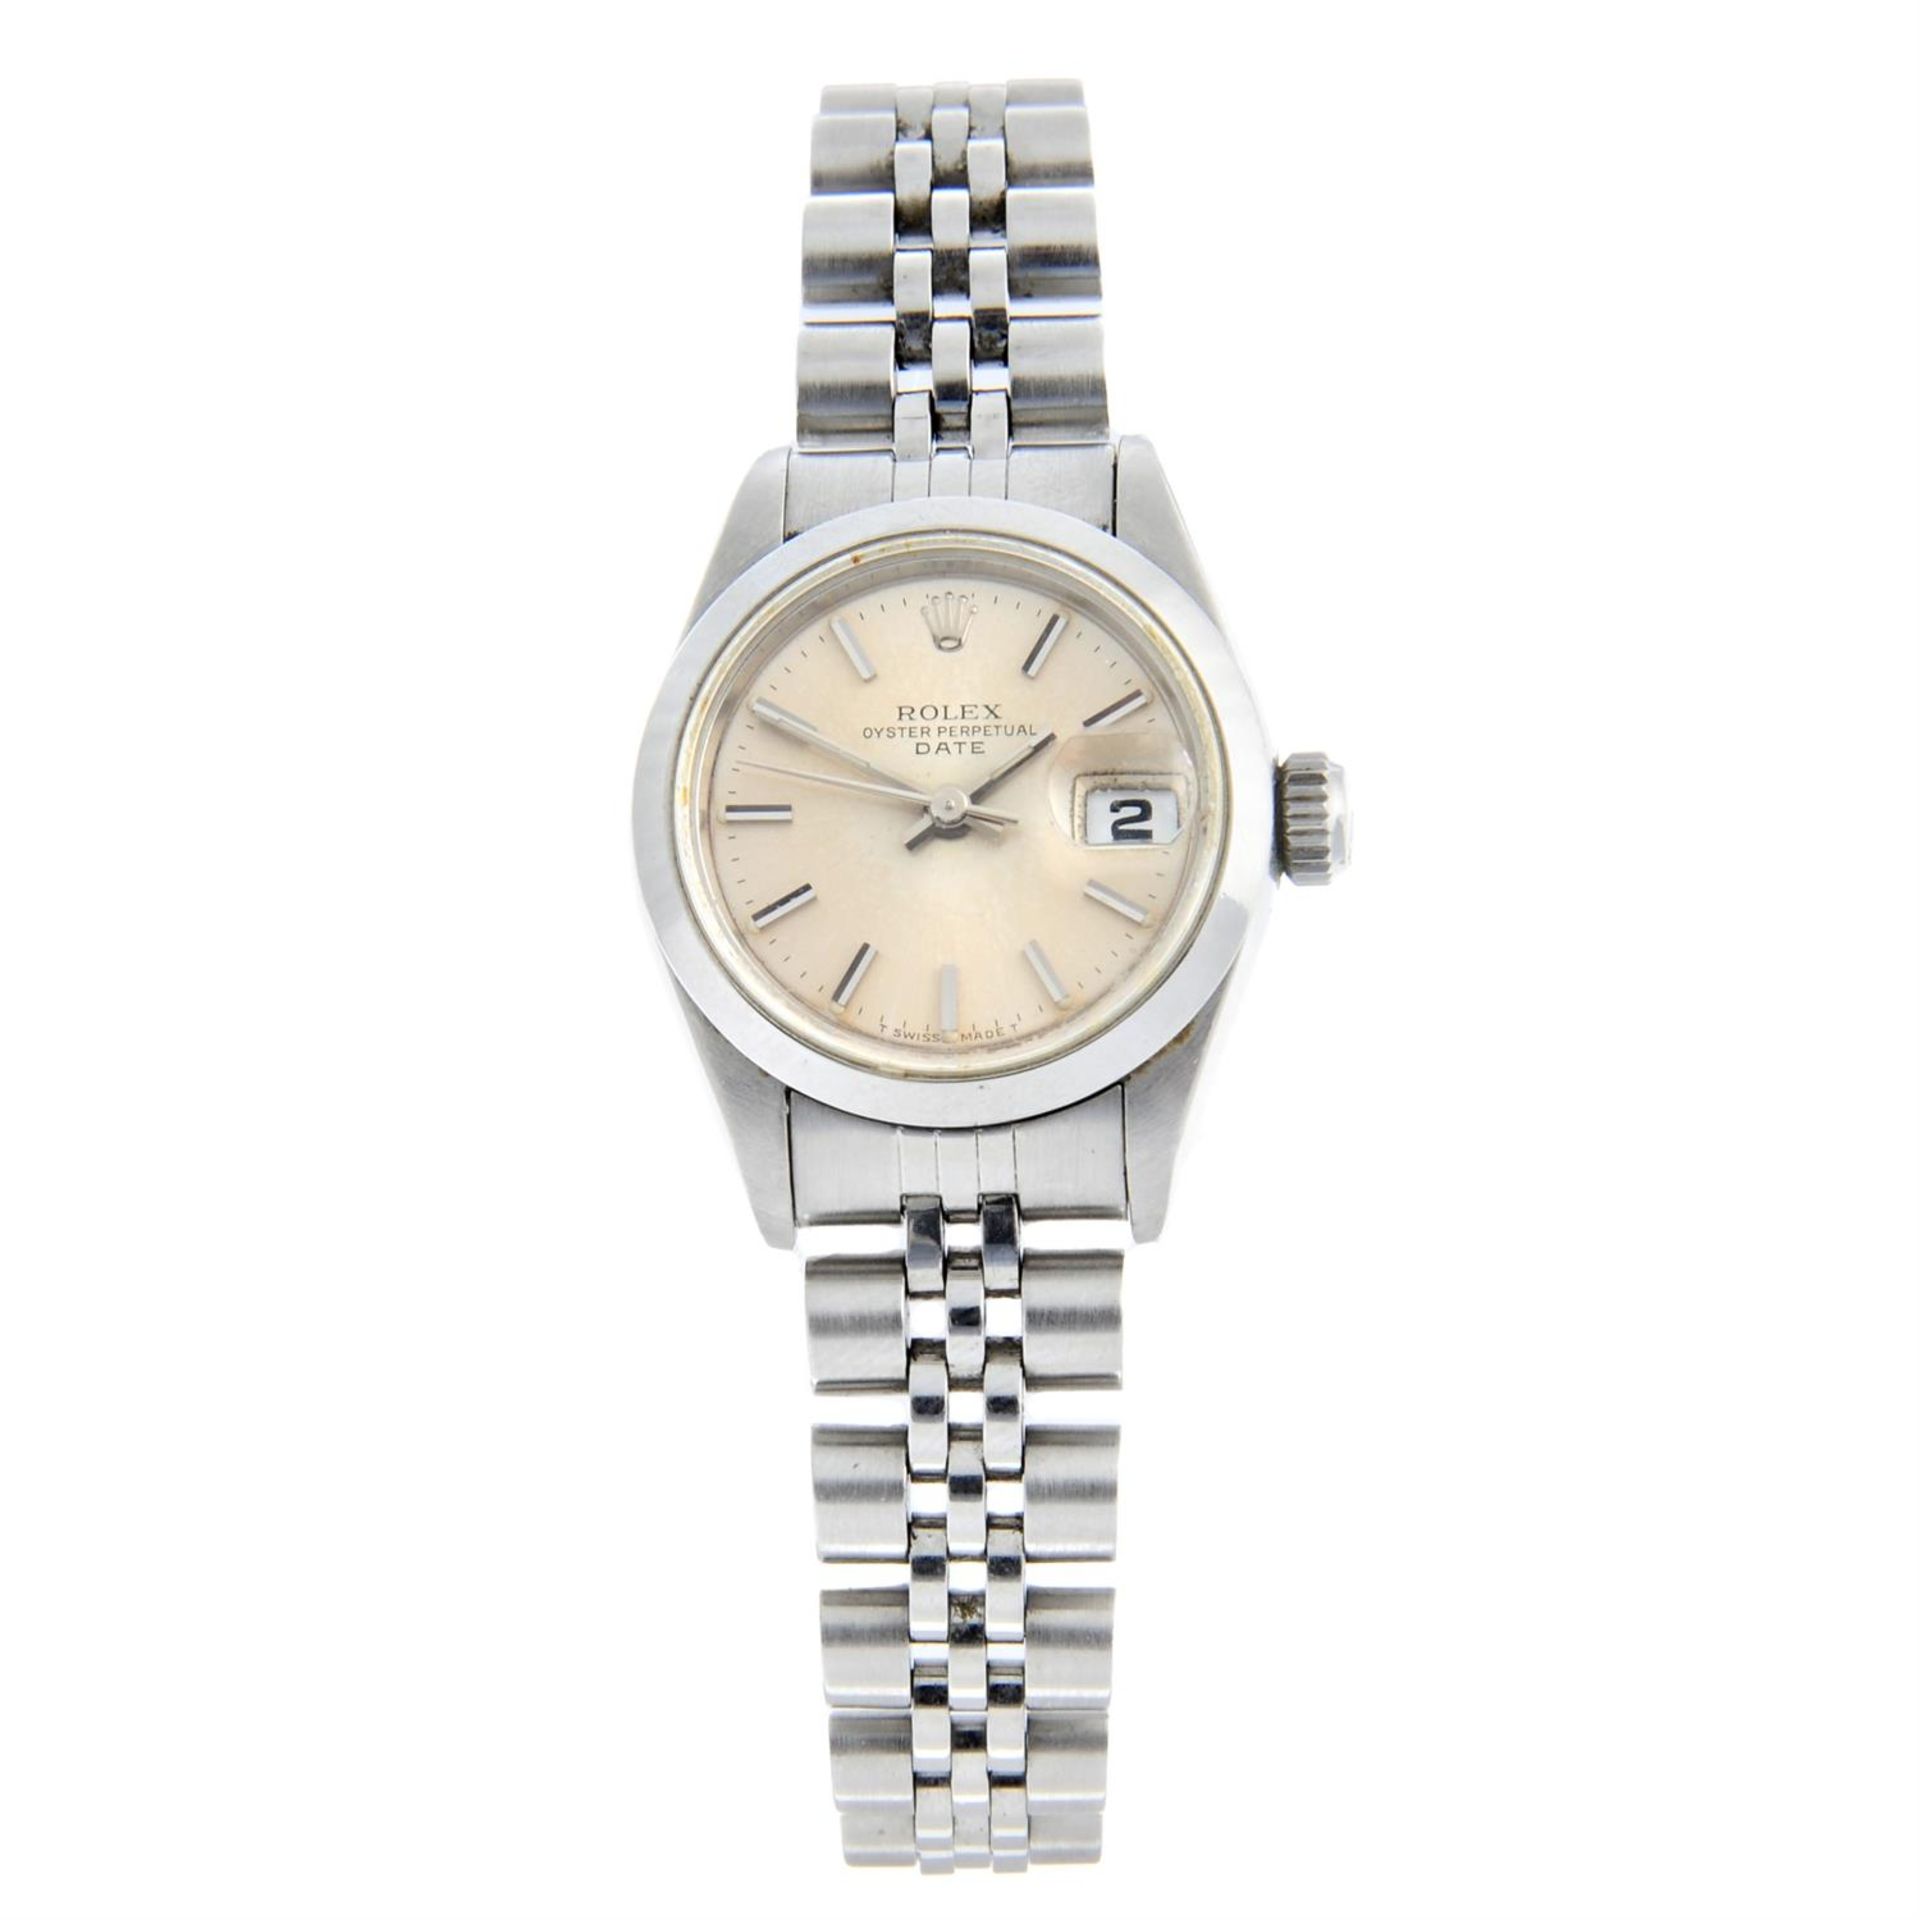 Rolex - an Oyster Perpetual Date watch, 26mm.